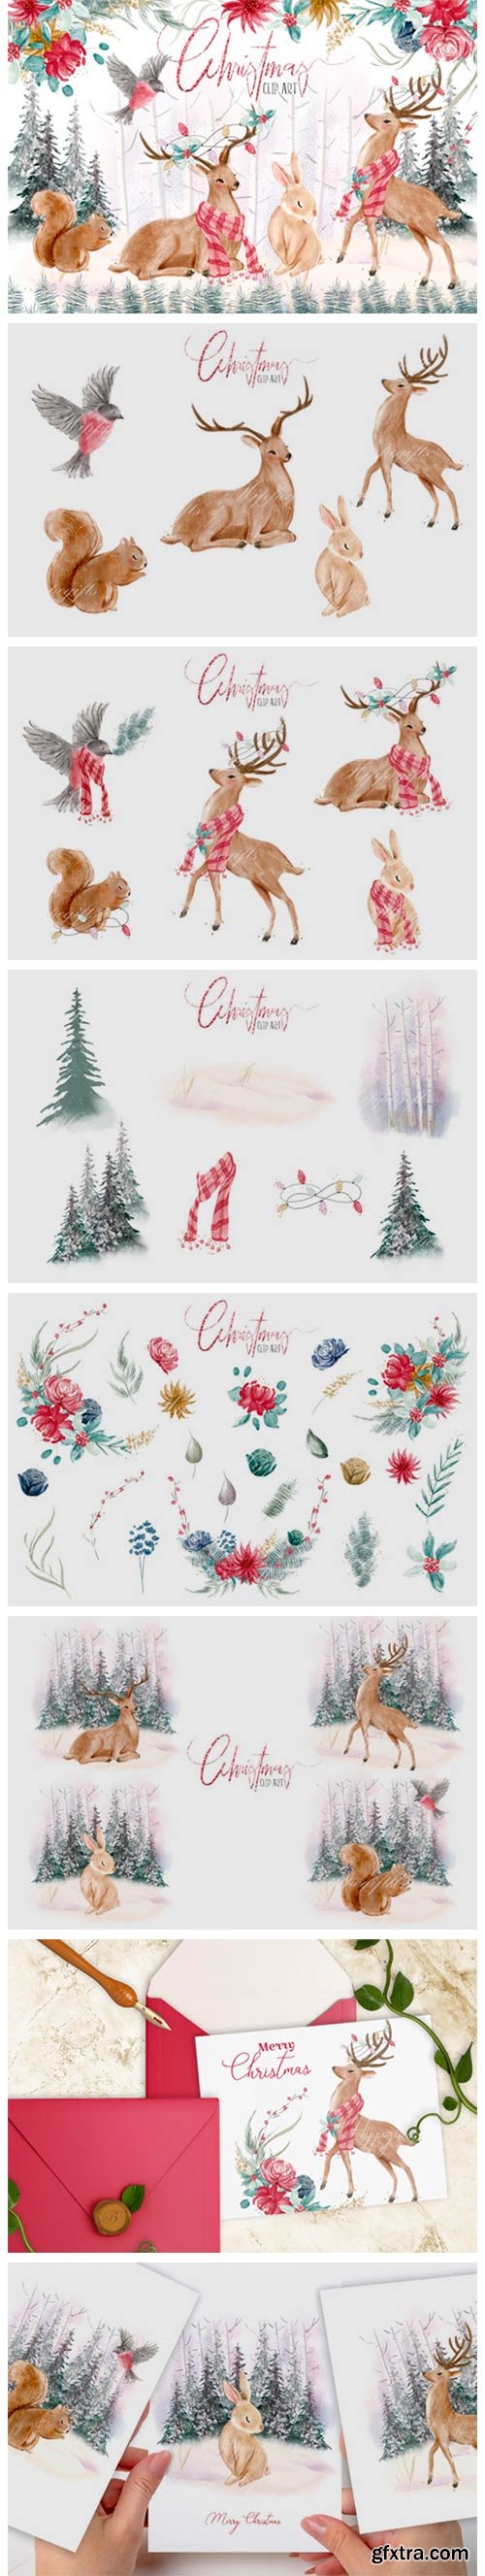 Woodland Christmas Illustrations 6296211